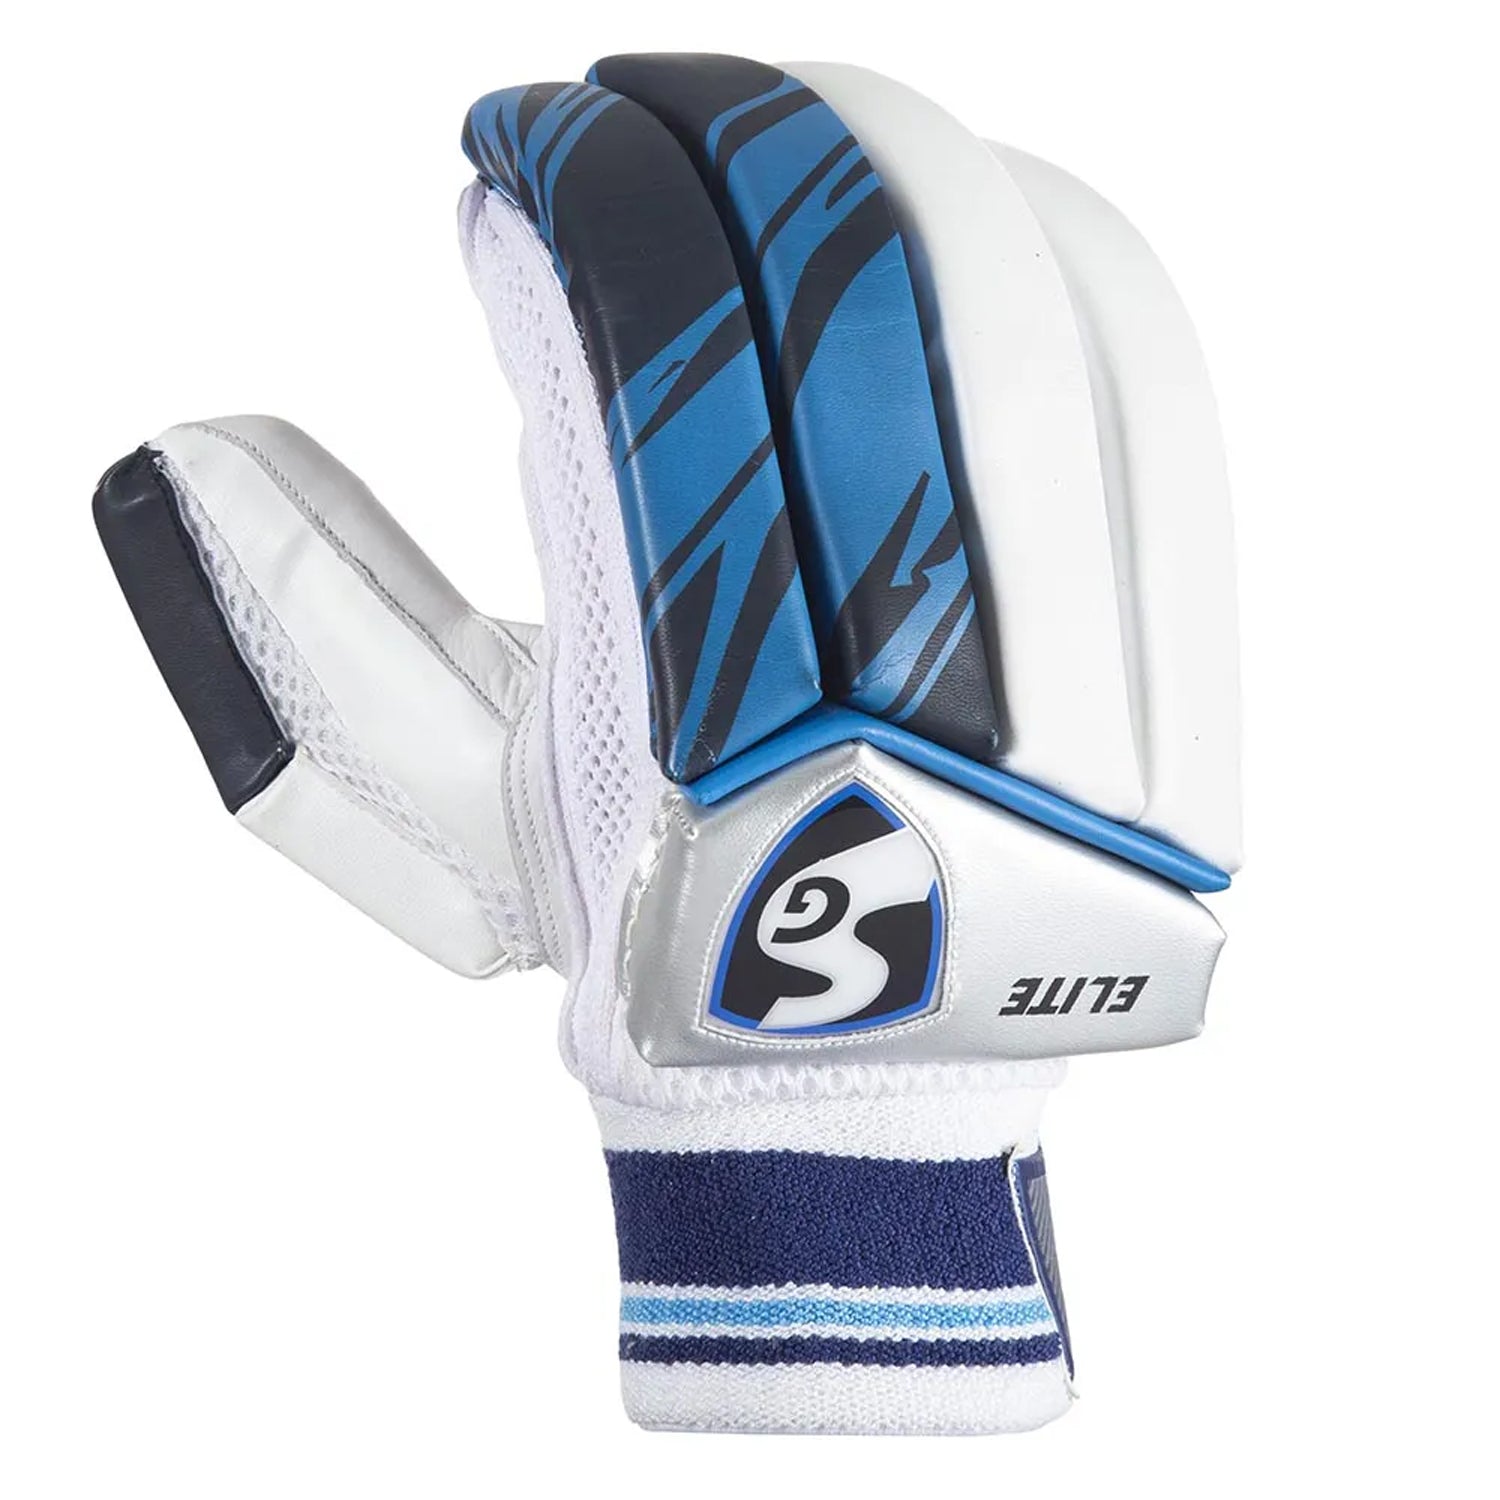 SG Elite Batting Gloves - Left Hand - Best Price online Prokicksports.com